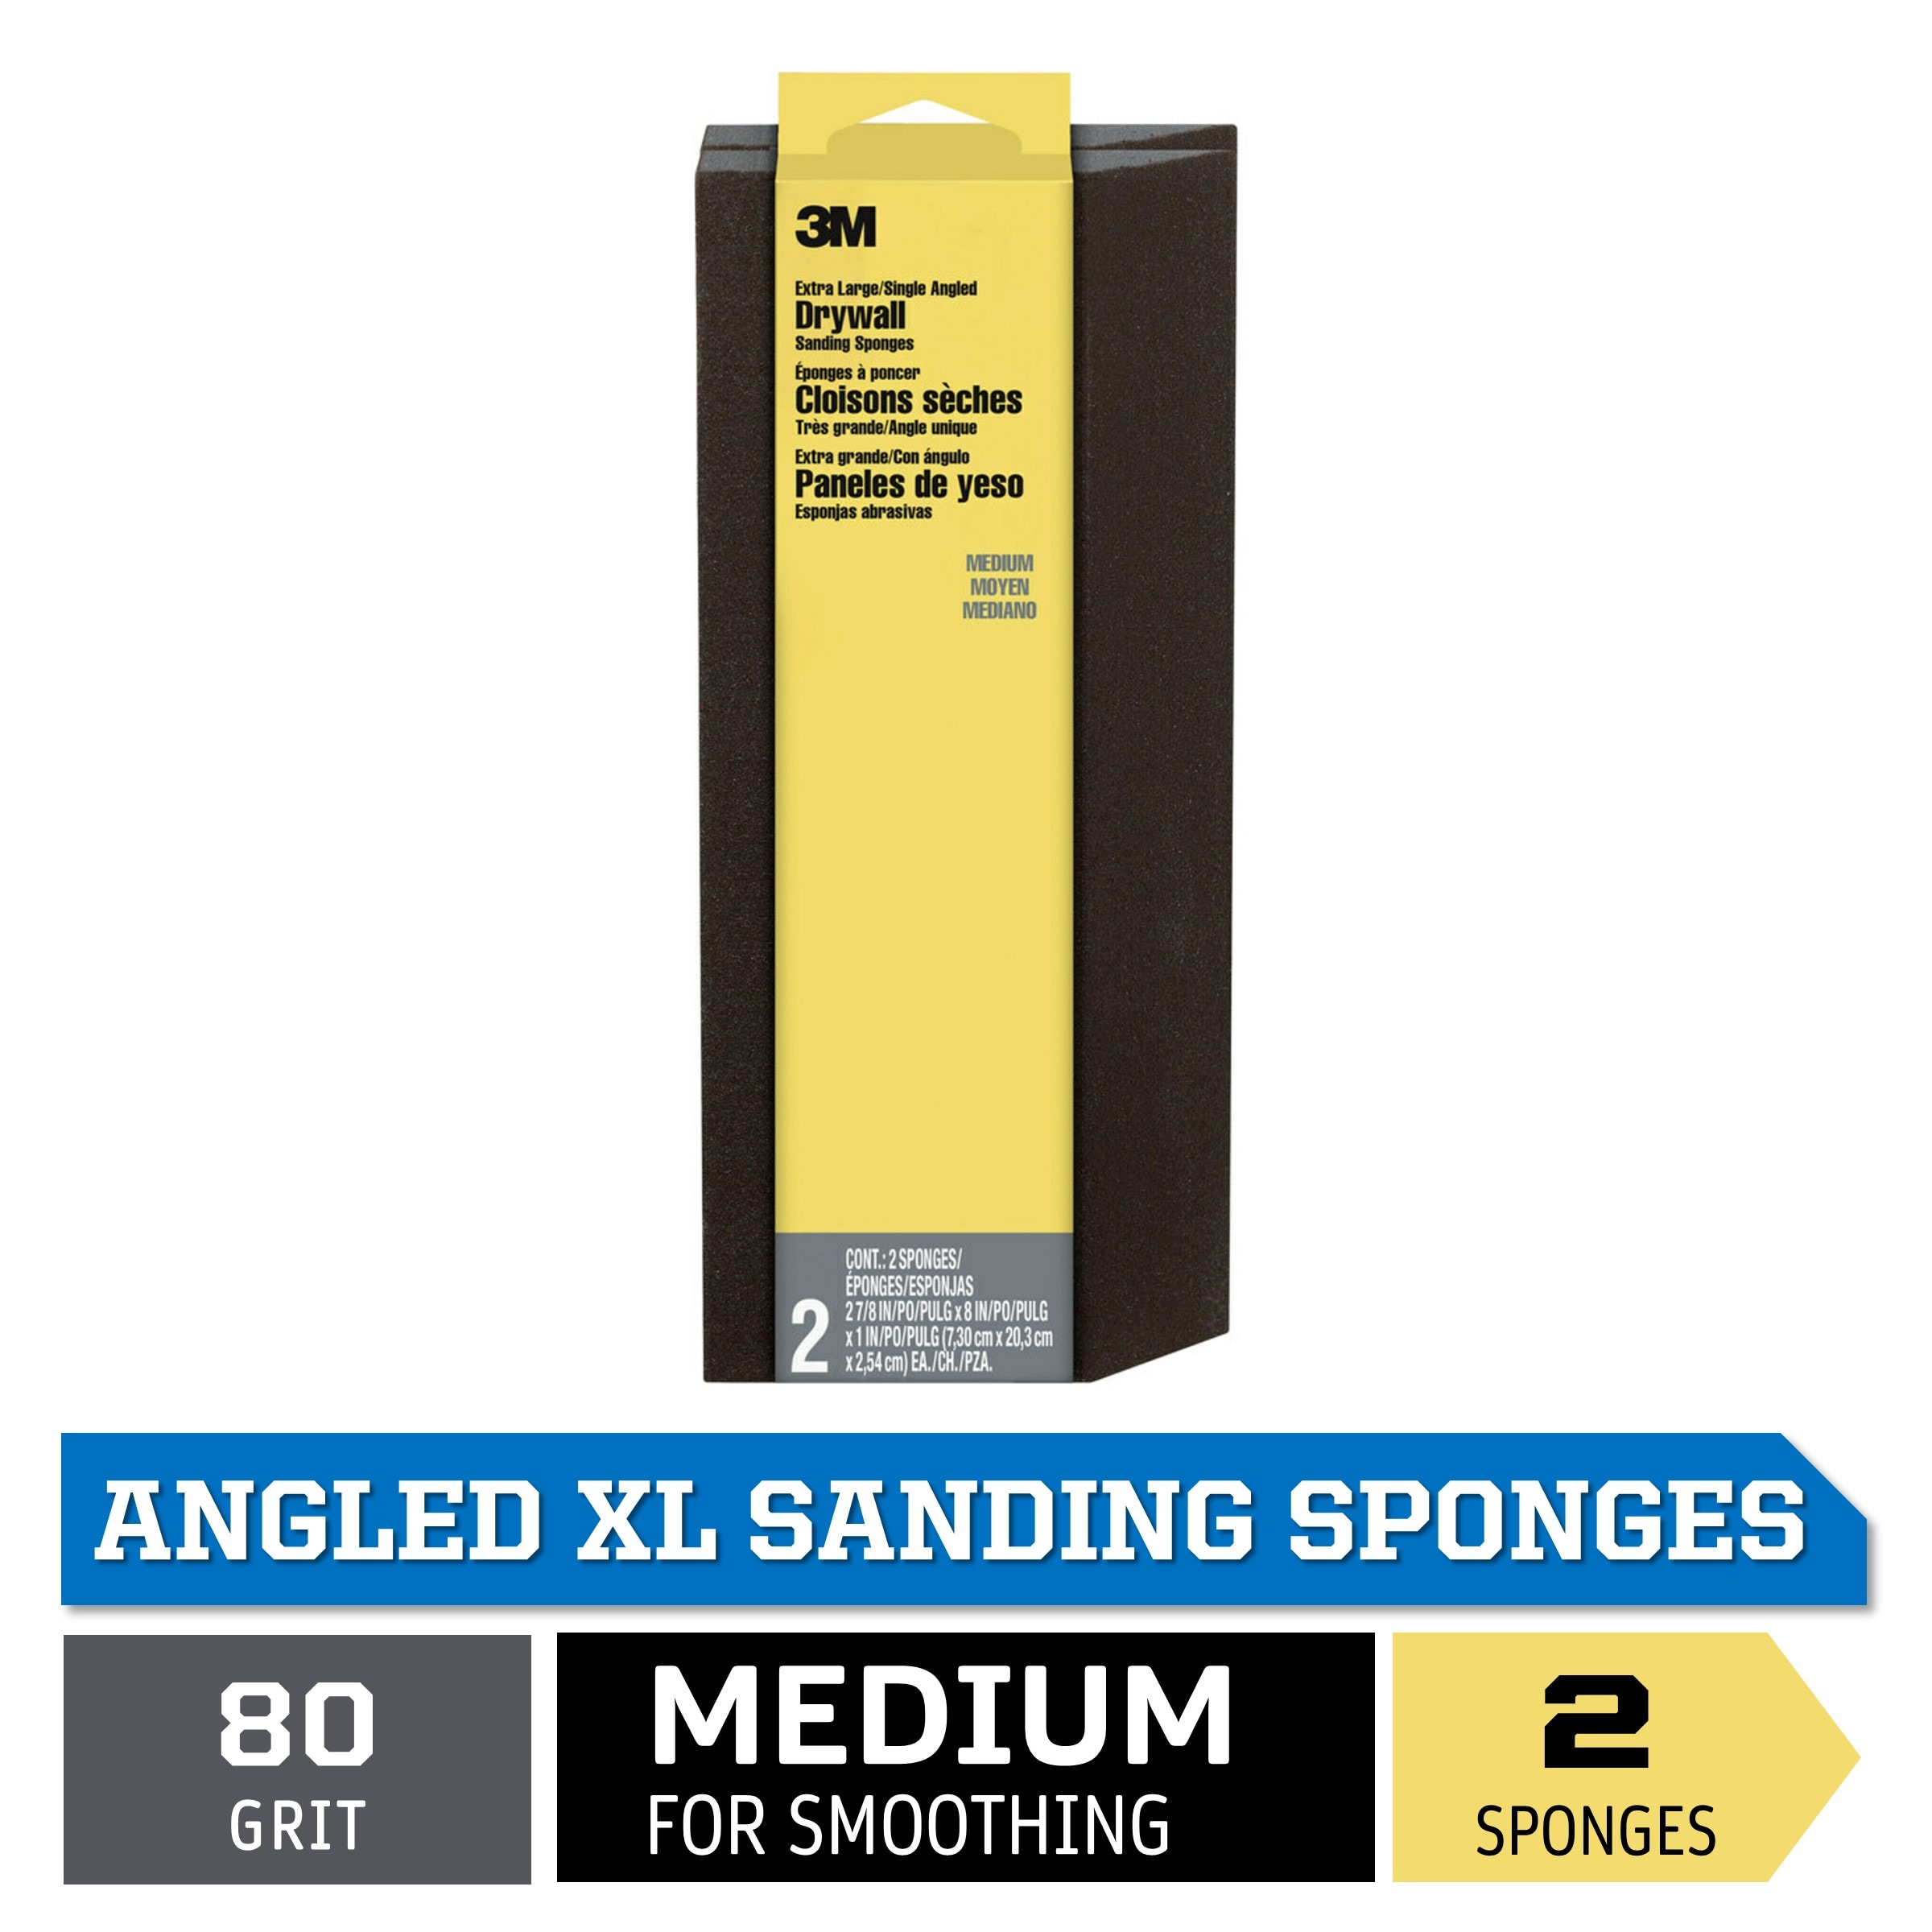 3M DSMC-F Large Area Sanding Sponge, Med/Coarse